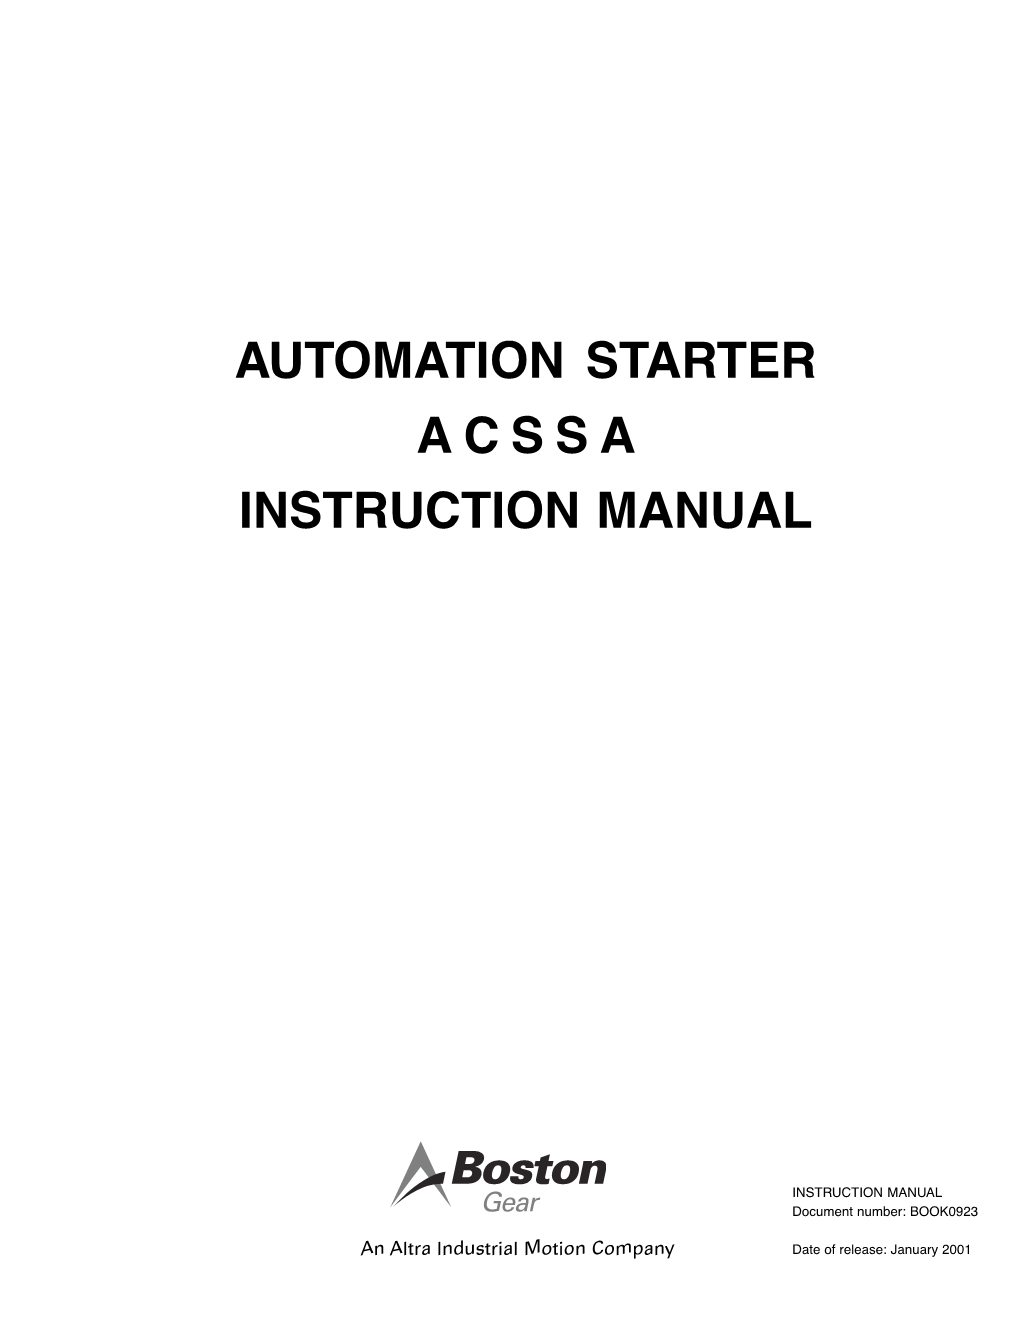 Automation Starter Acssa Instruction Manual